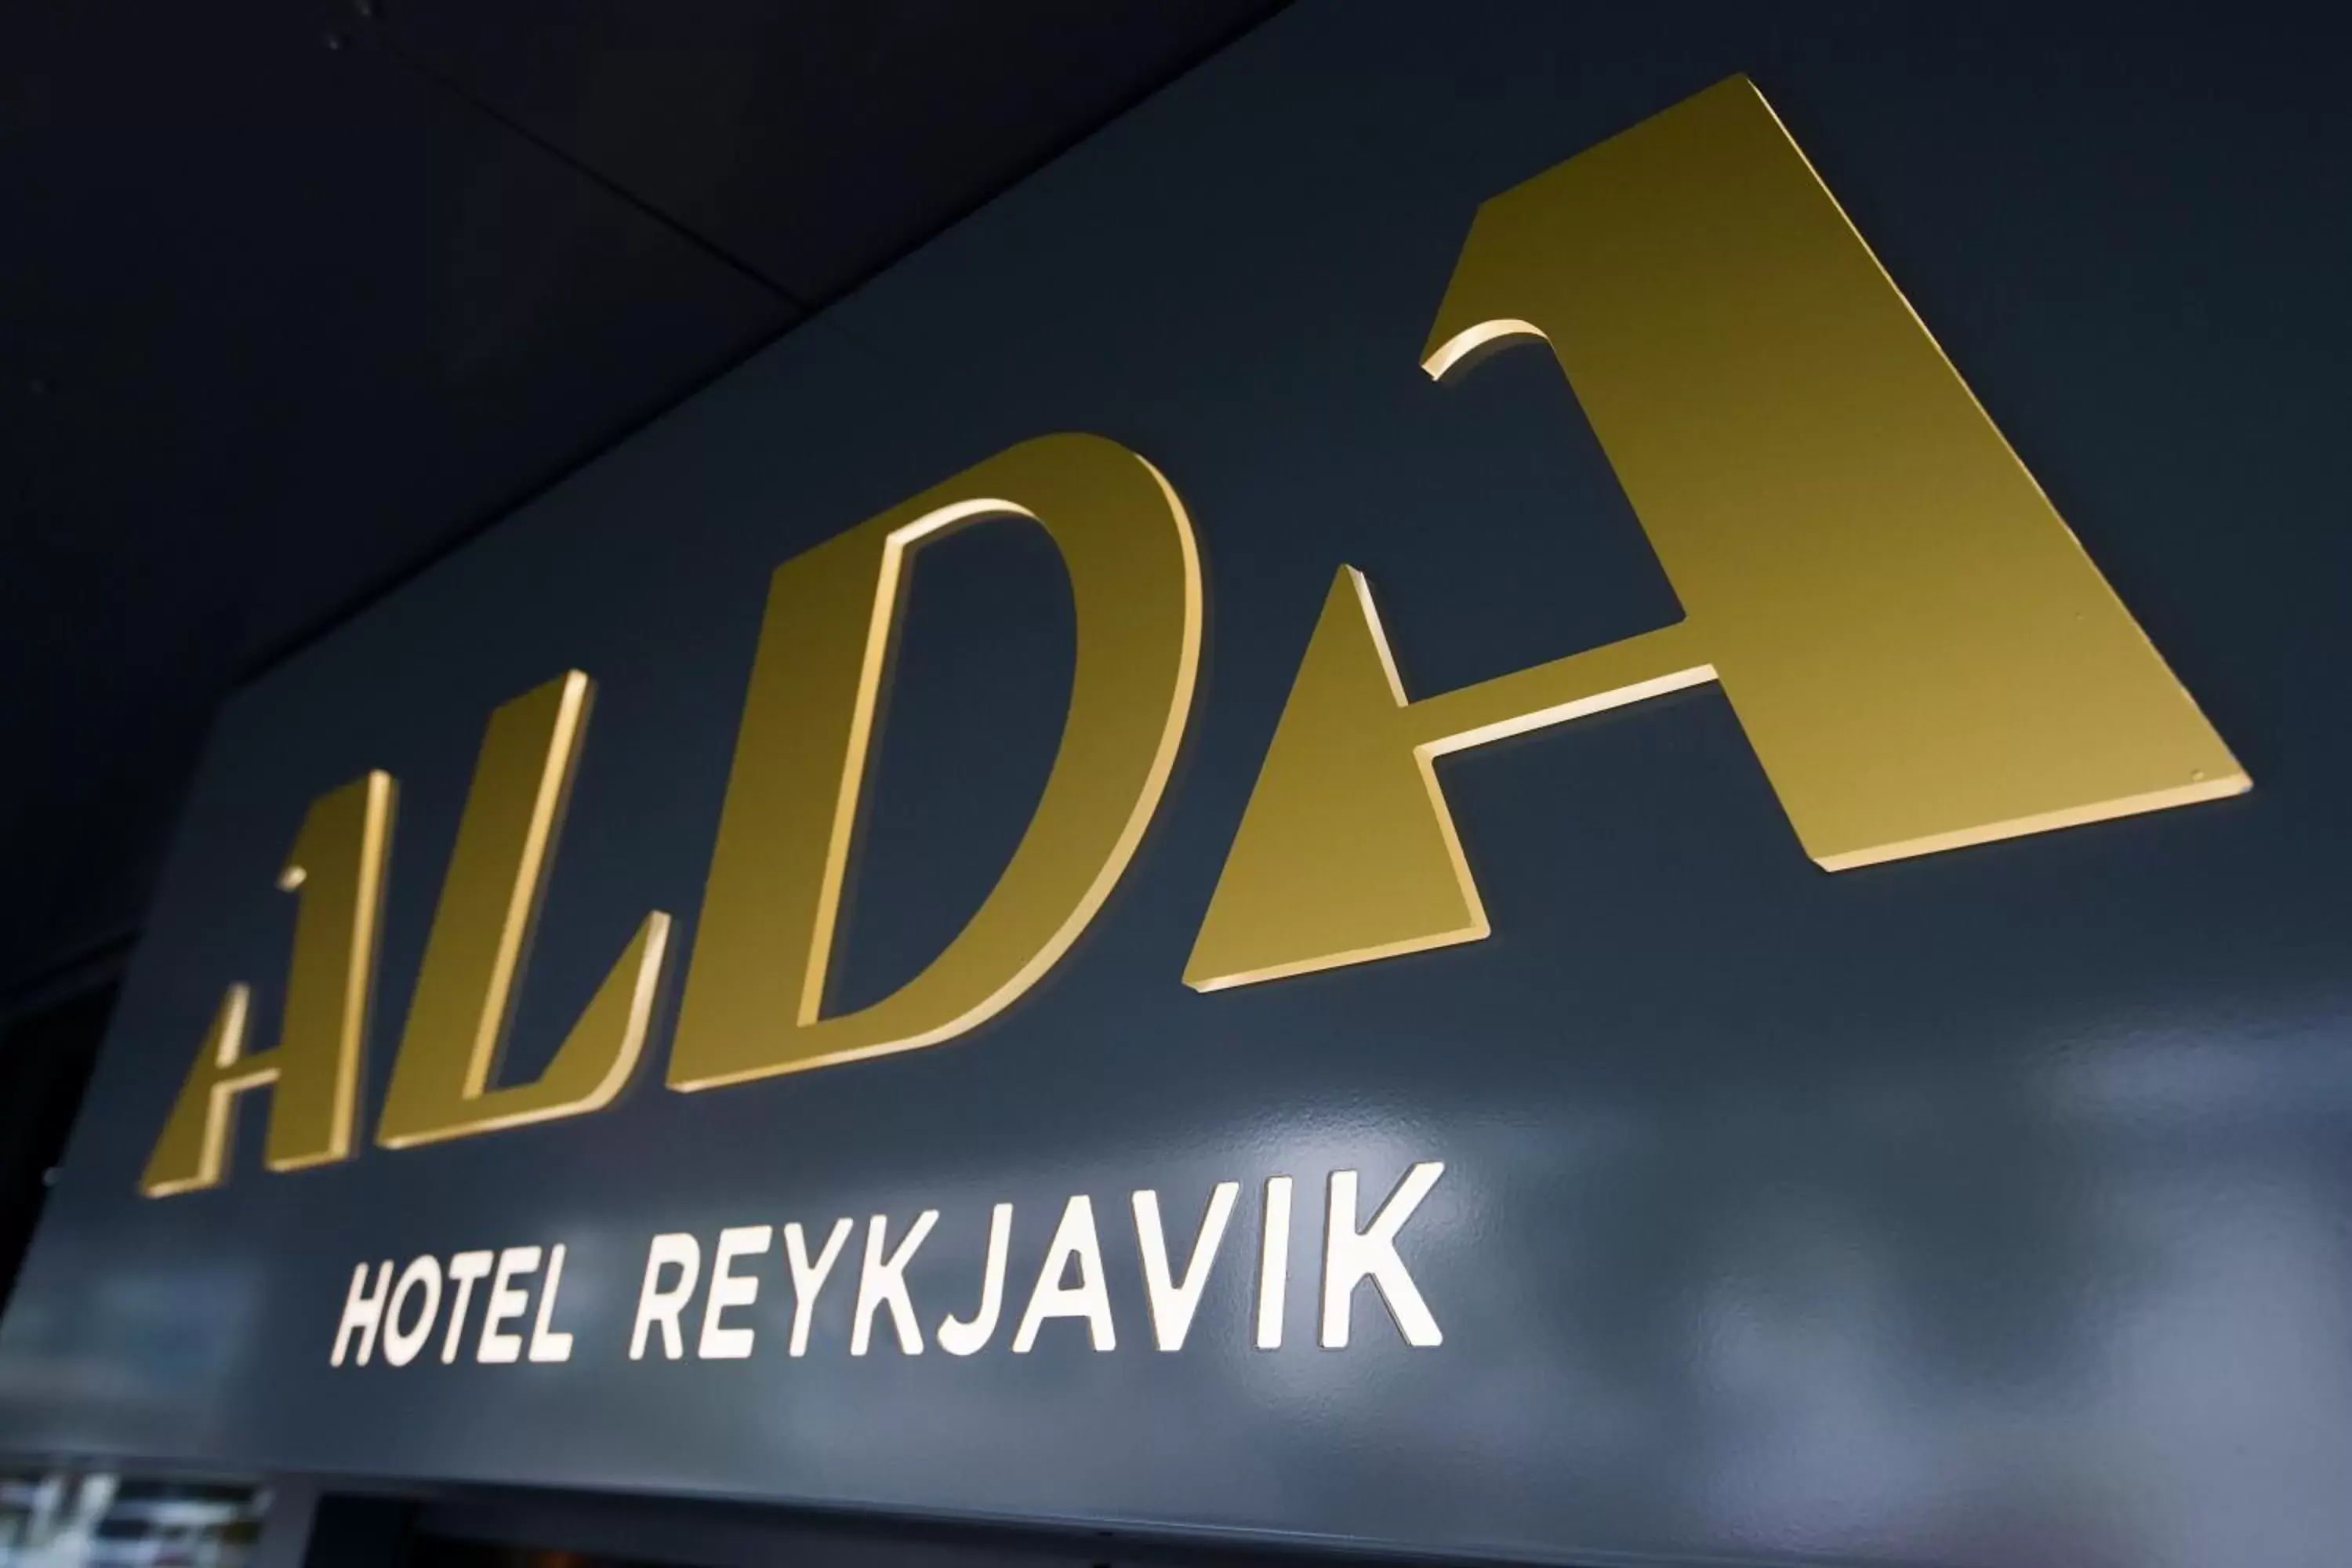 Decorative detail in Alda Hotel Reykjavík